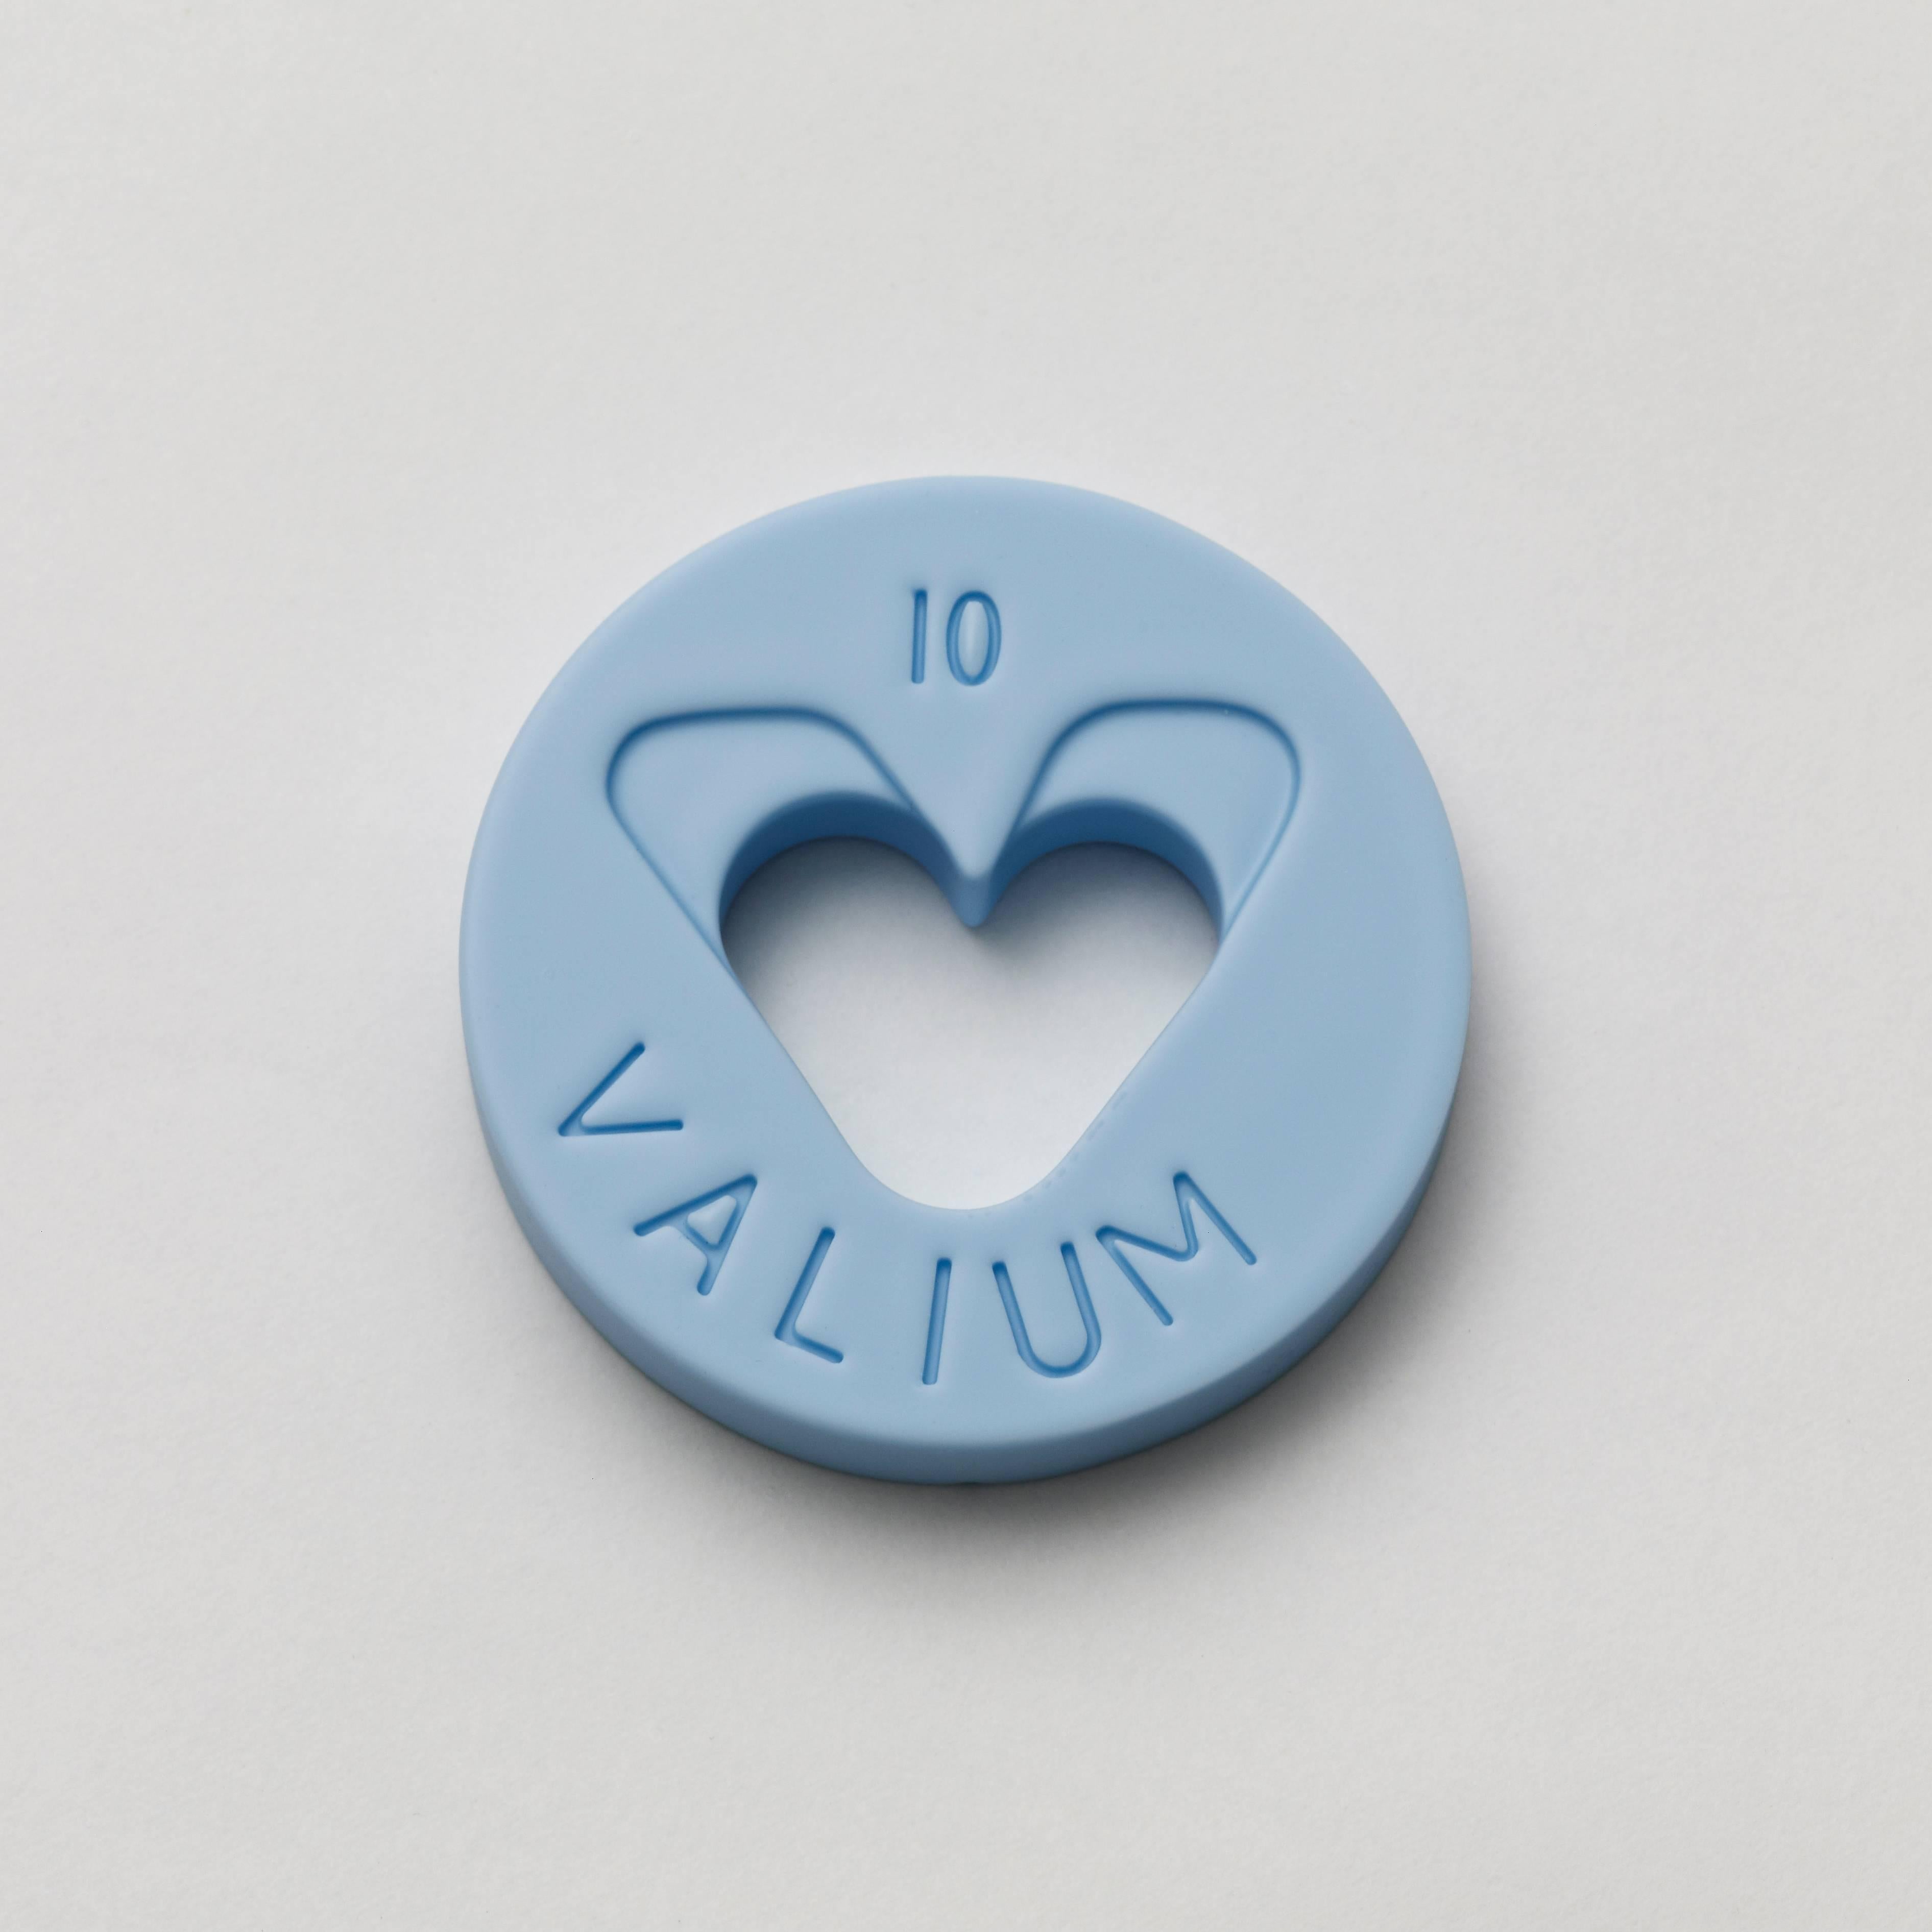 Valium 10mg Roche (Baby blue) - Sculpture by Damien Hirst